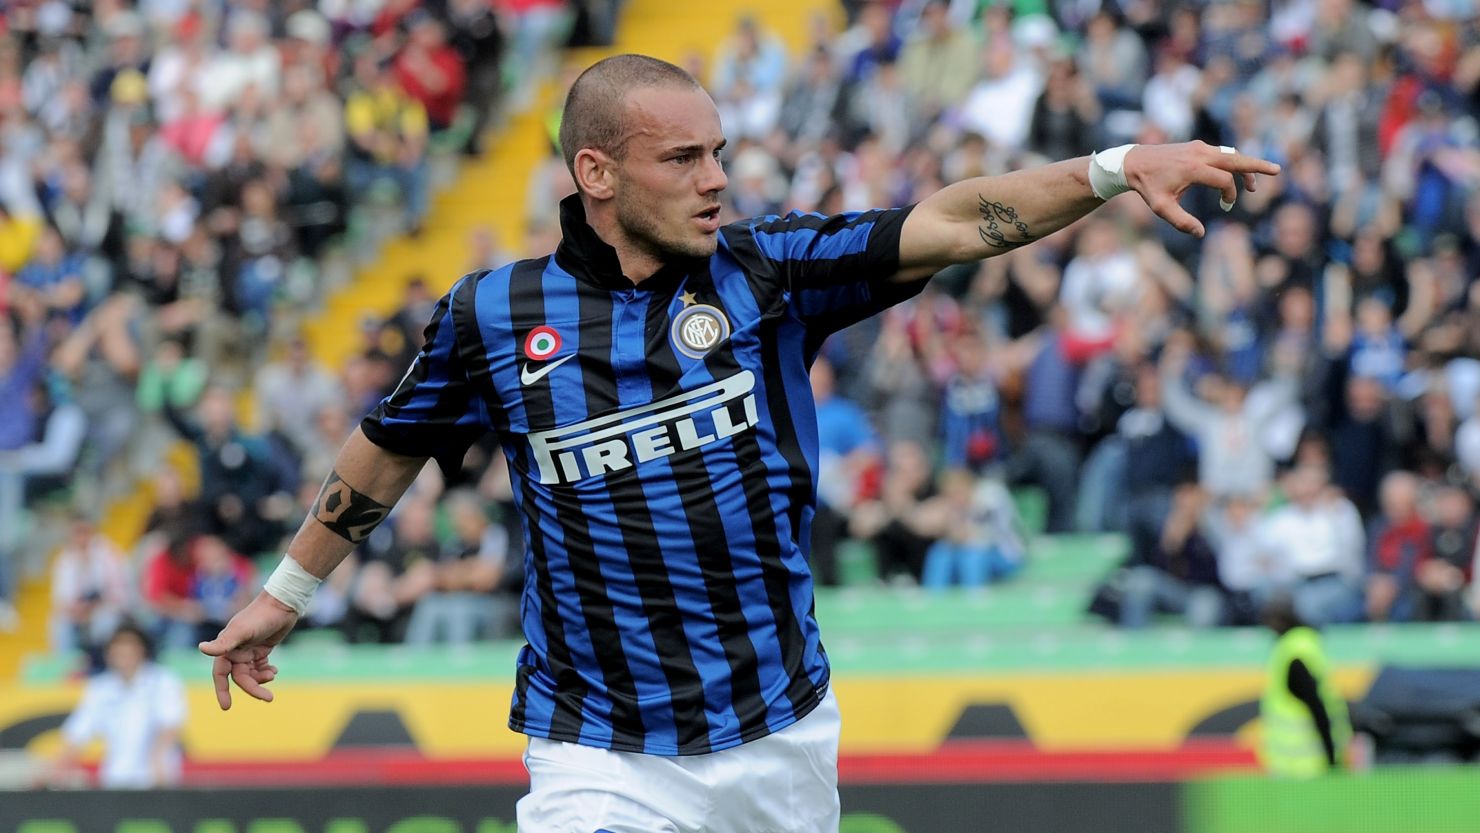 Dutchman Wesley Sneijder scored twice as Inter won again on Wednesday.